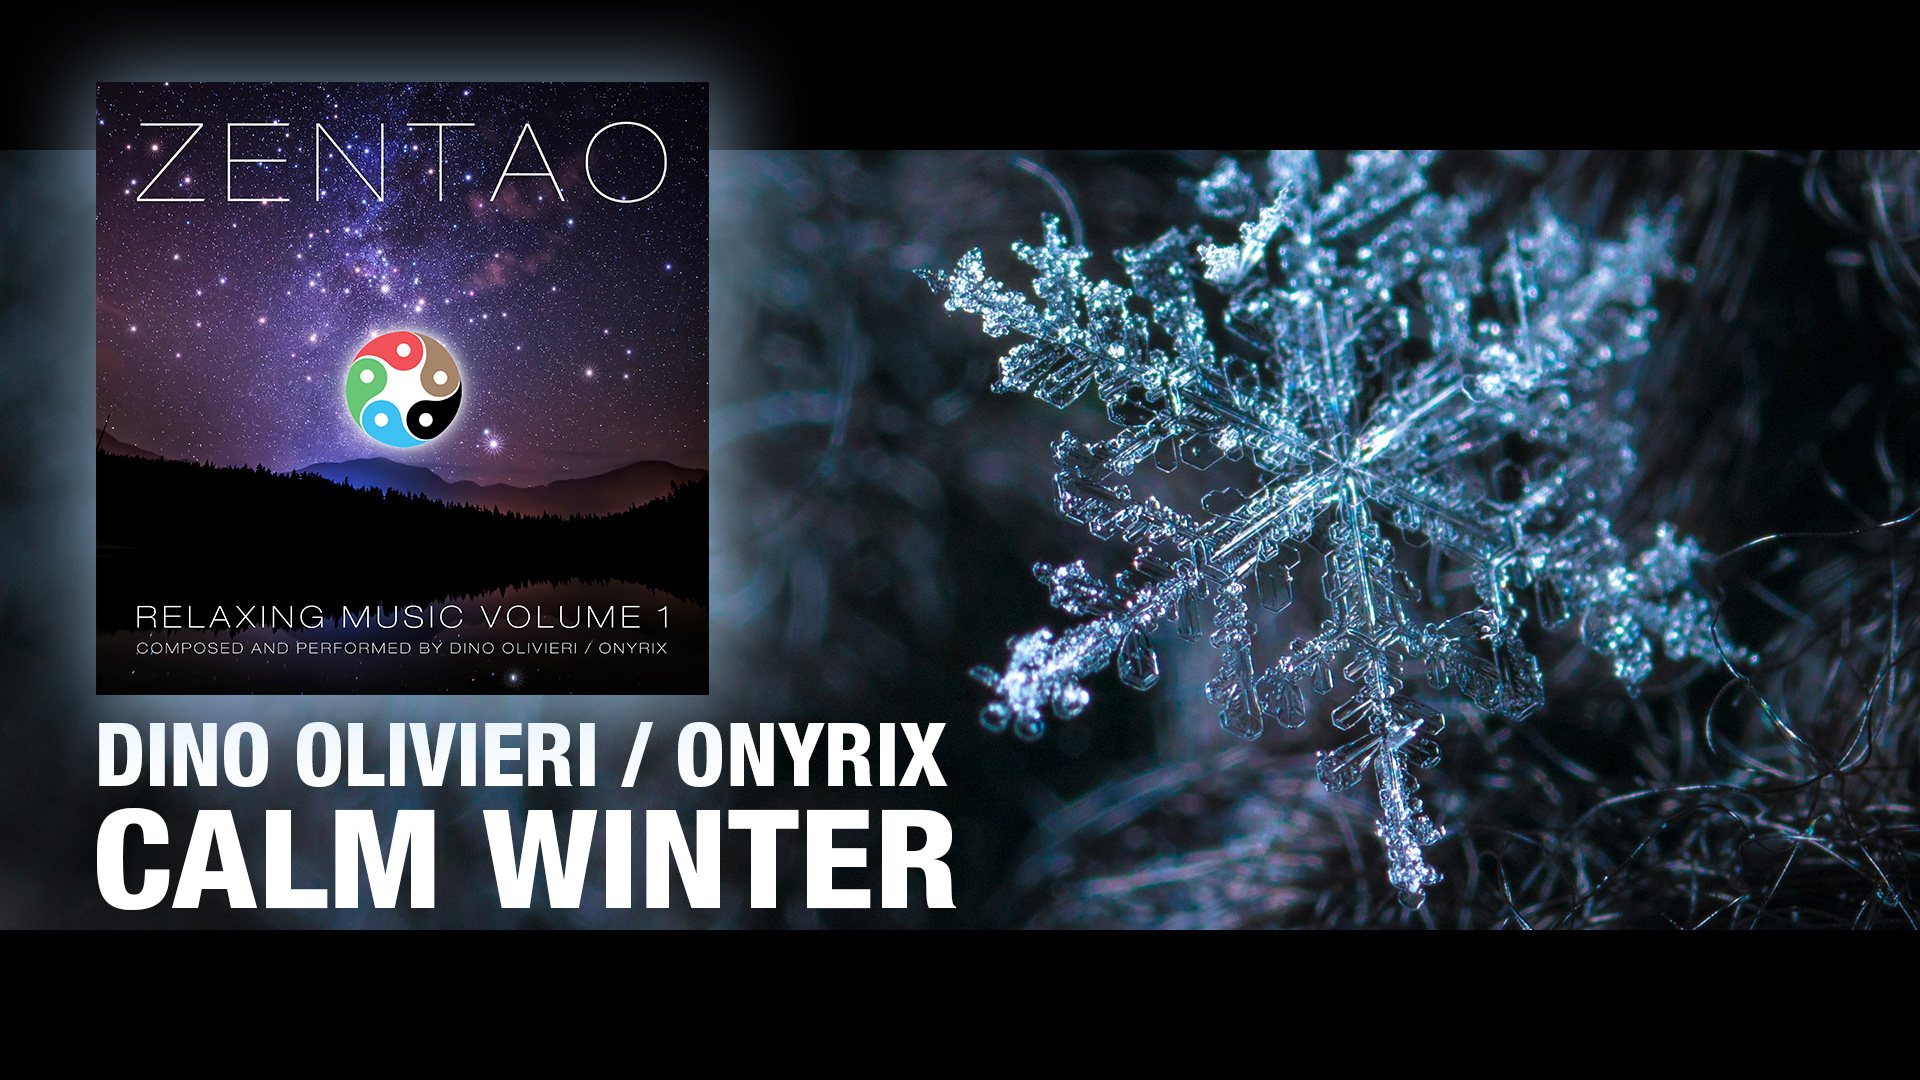 Calm Winter - ZENTAO Relaxing Music Volume 1 by Dino Olivieri